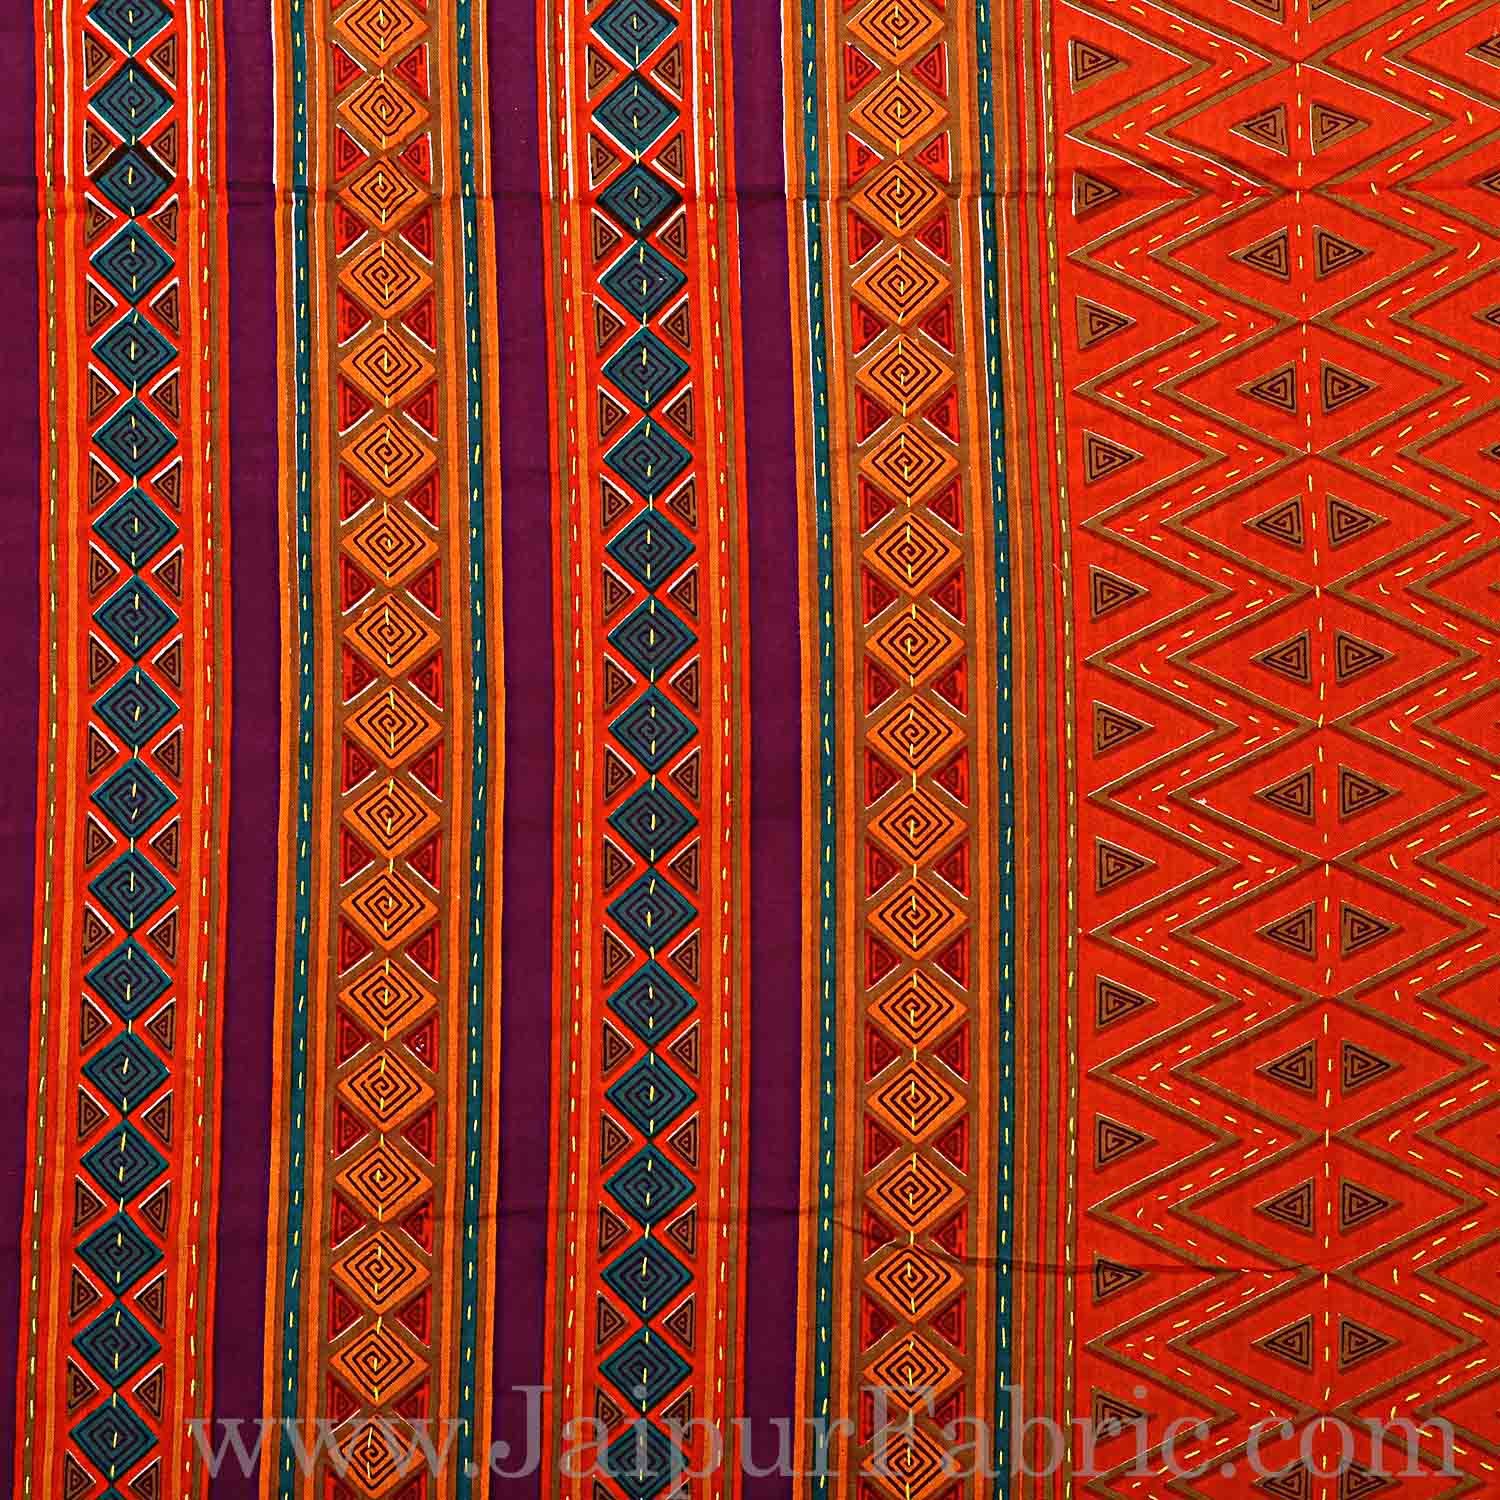 Double Bedsheet Katha Work Orange Border Zik-Zak Print